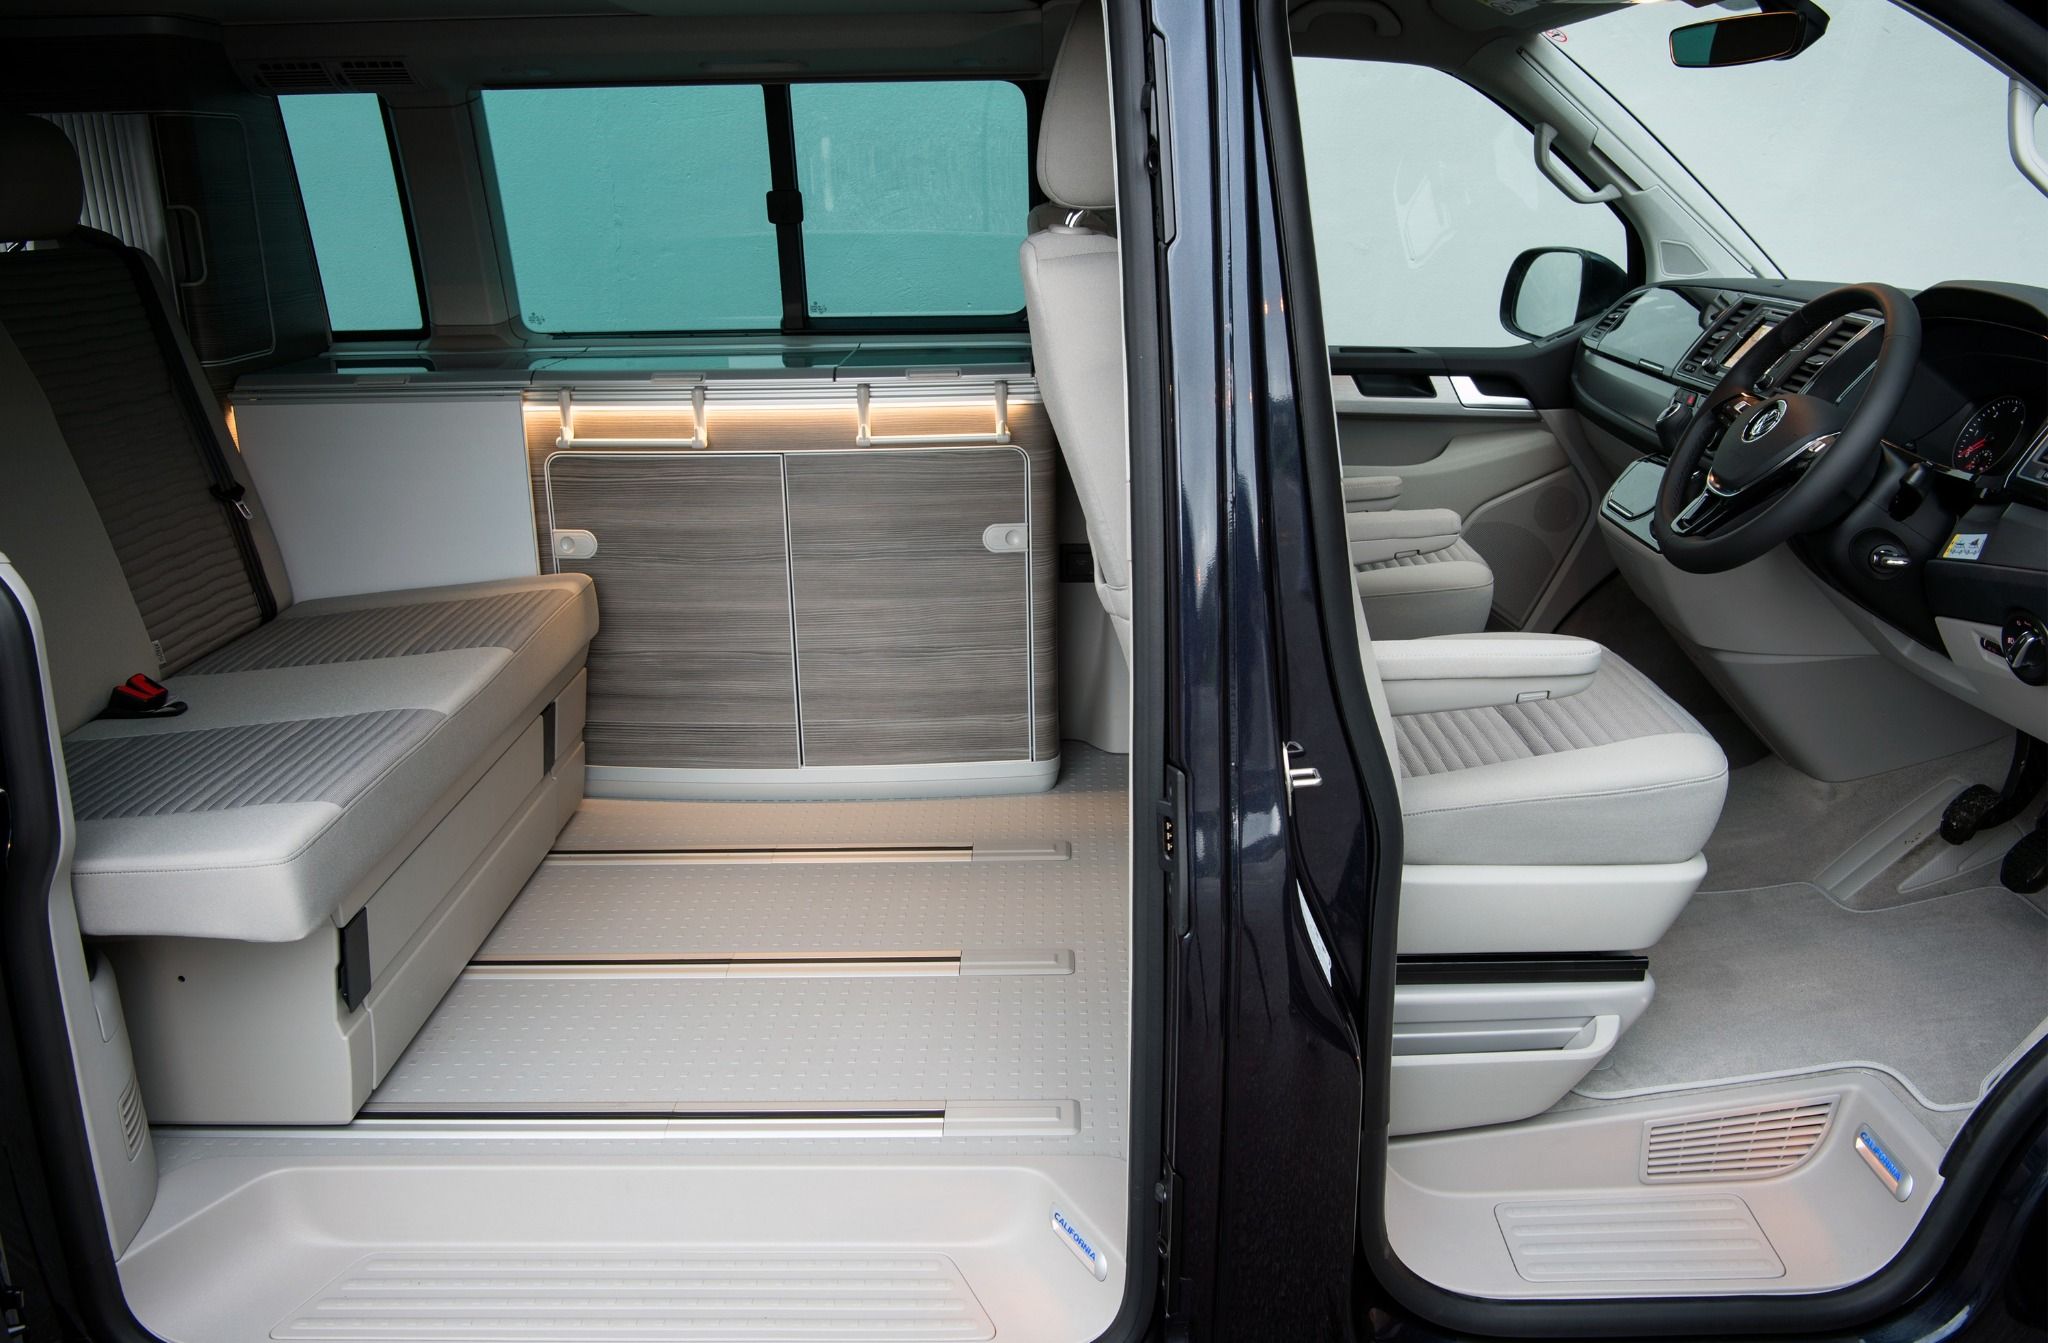 VW California Ocean campervan interior seats